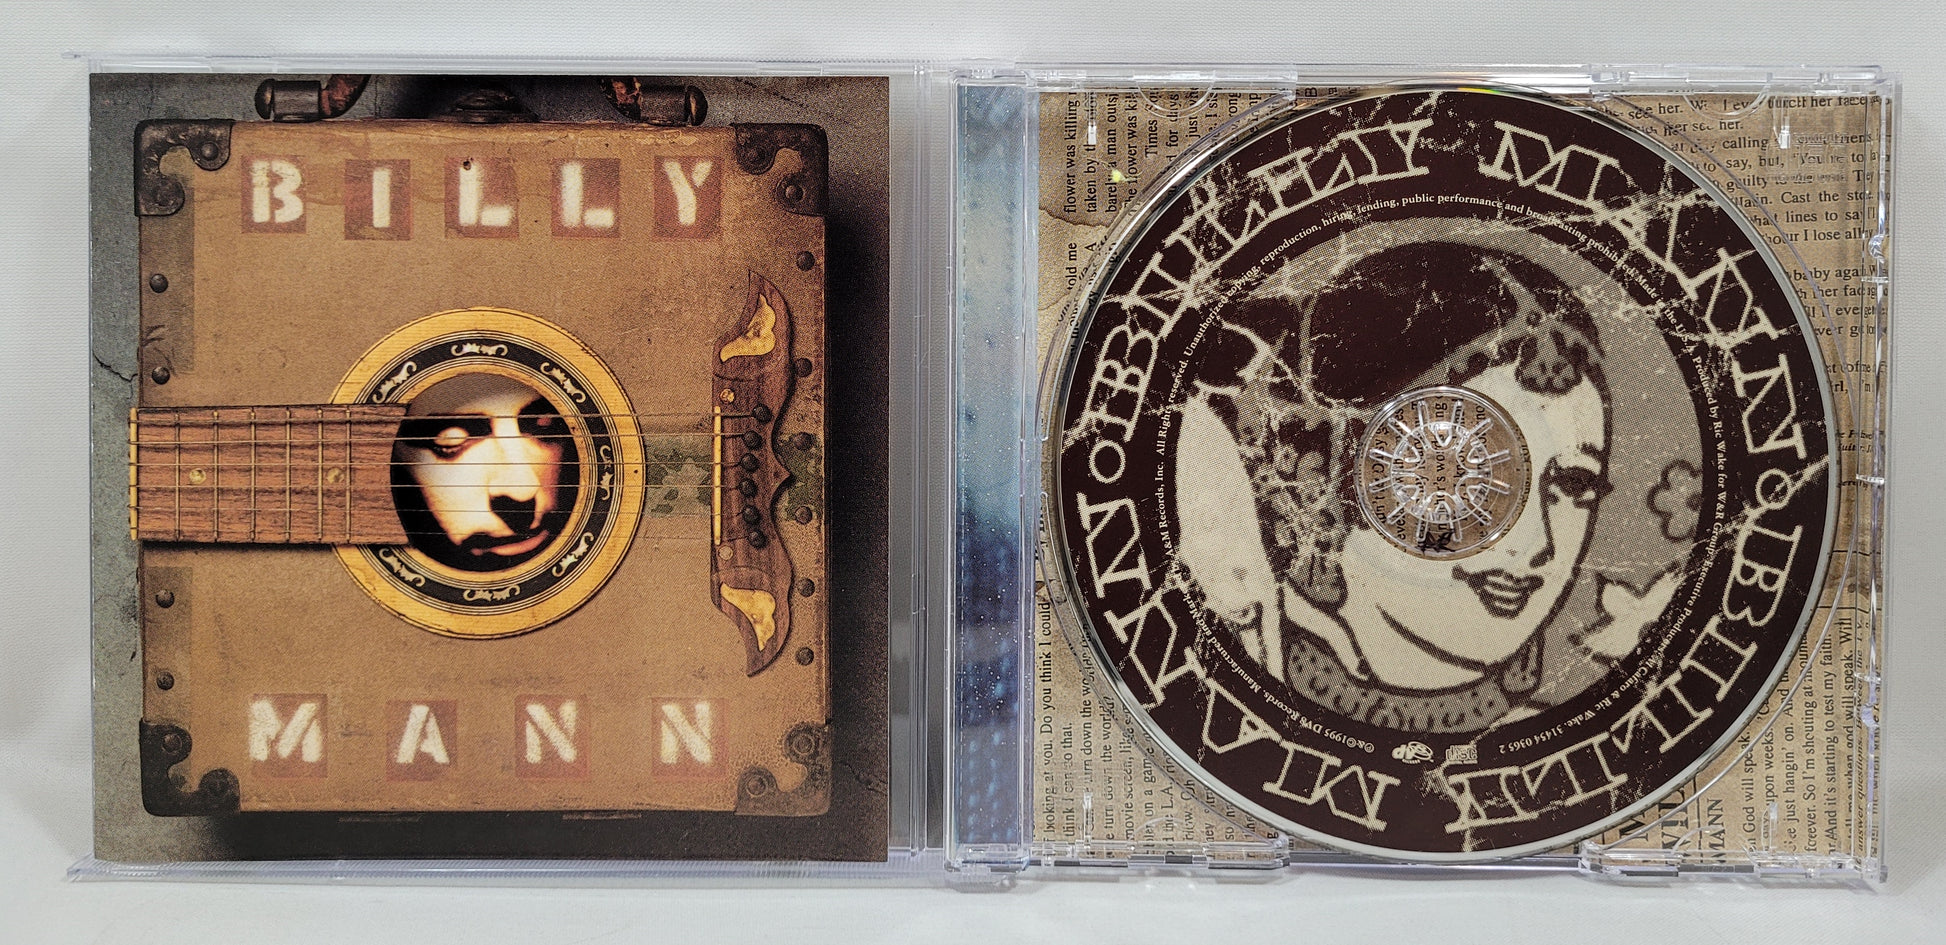 Billy Mann - Billy Mann [CD]